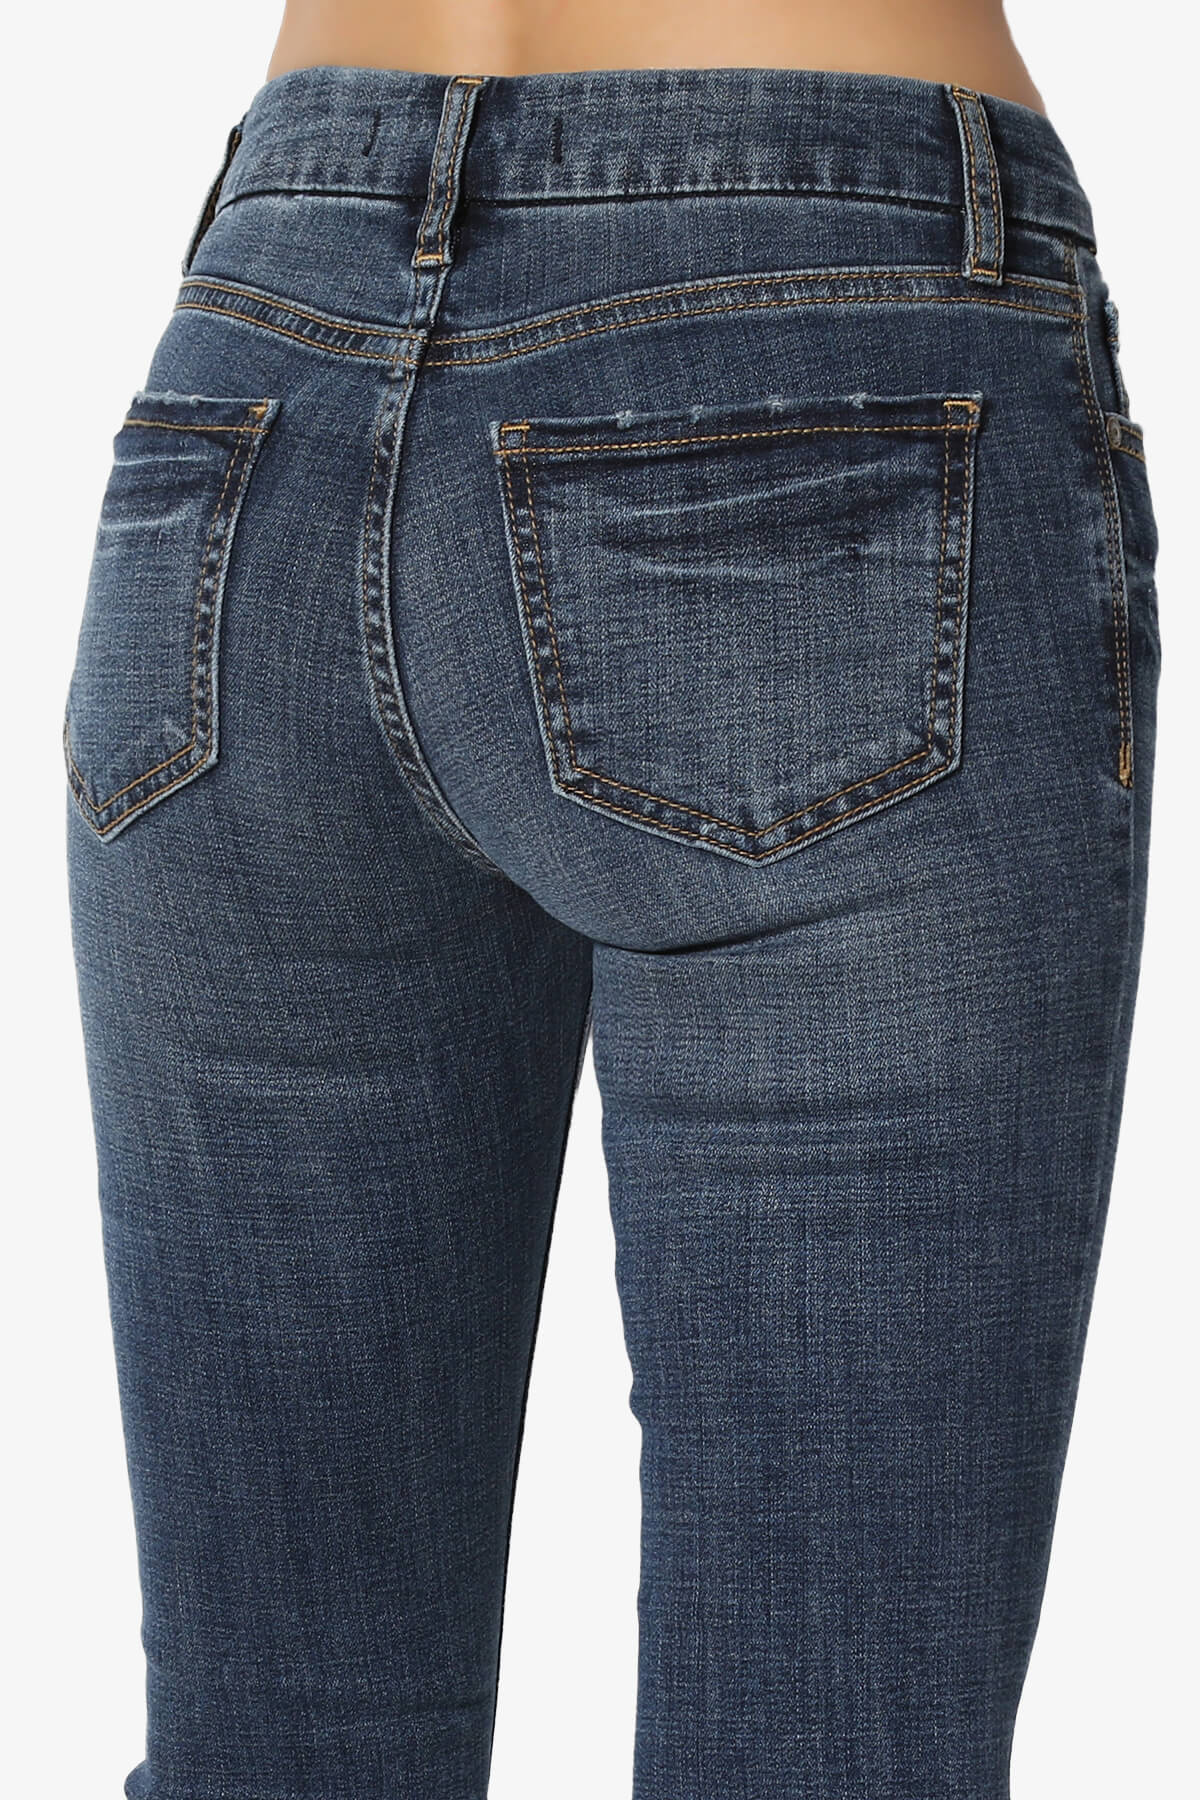 TheMogan Women's 0~3X Roll Up Mid Rise Dark Vintage Wash Tencel Denim Skinny Jeans - image 5 of 7